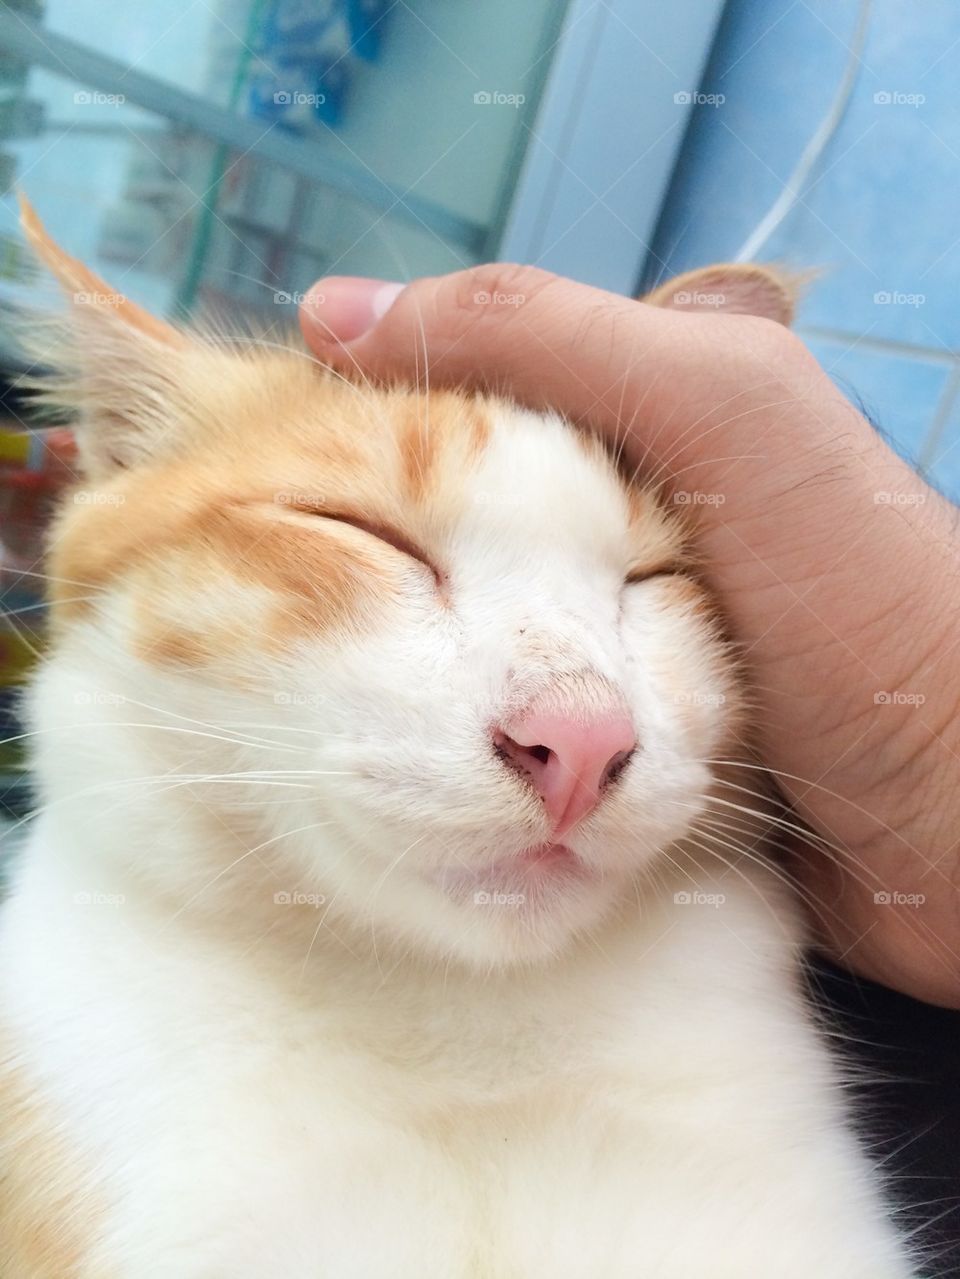 Cat sleep in my hand